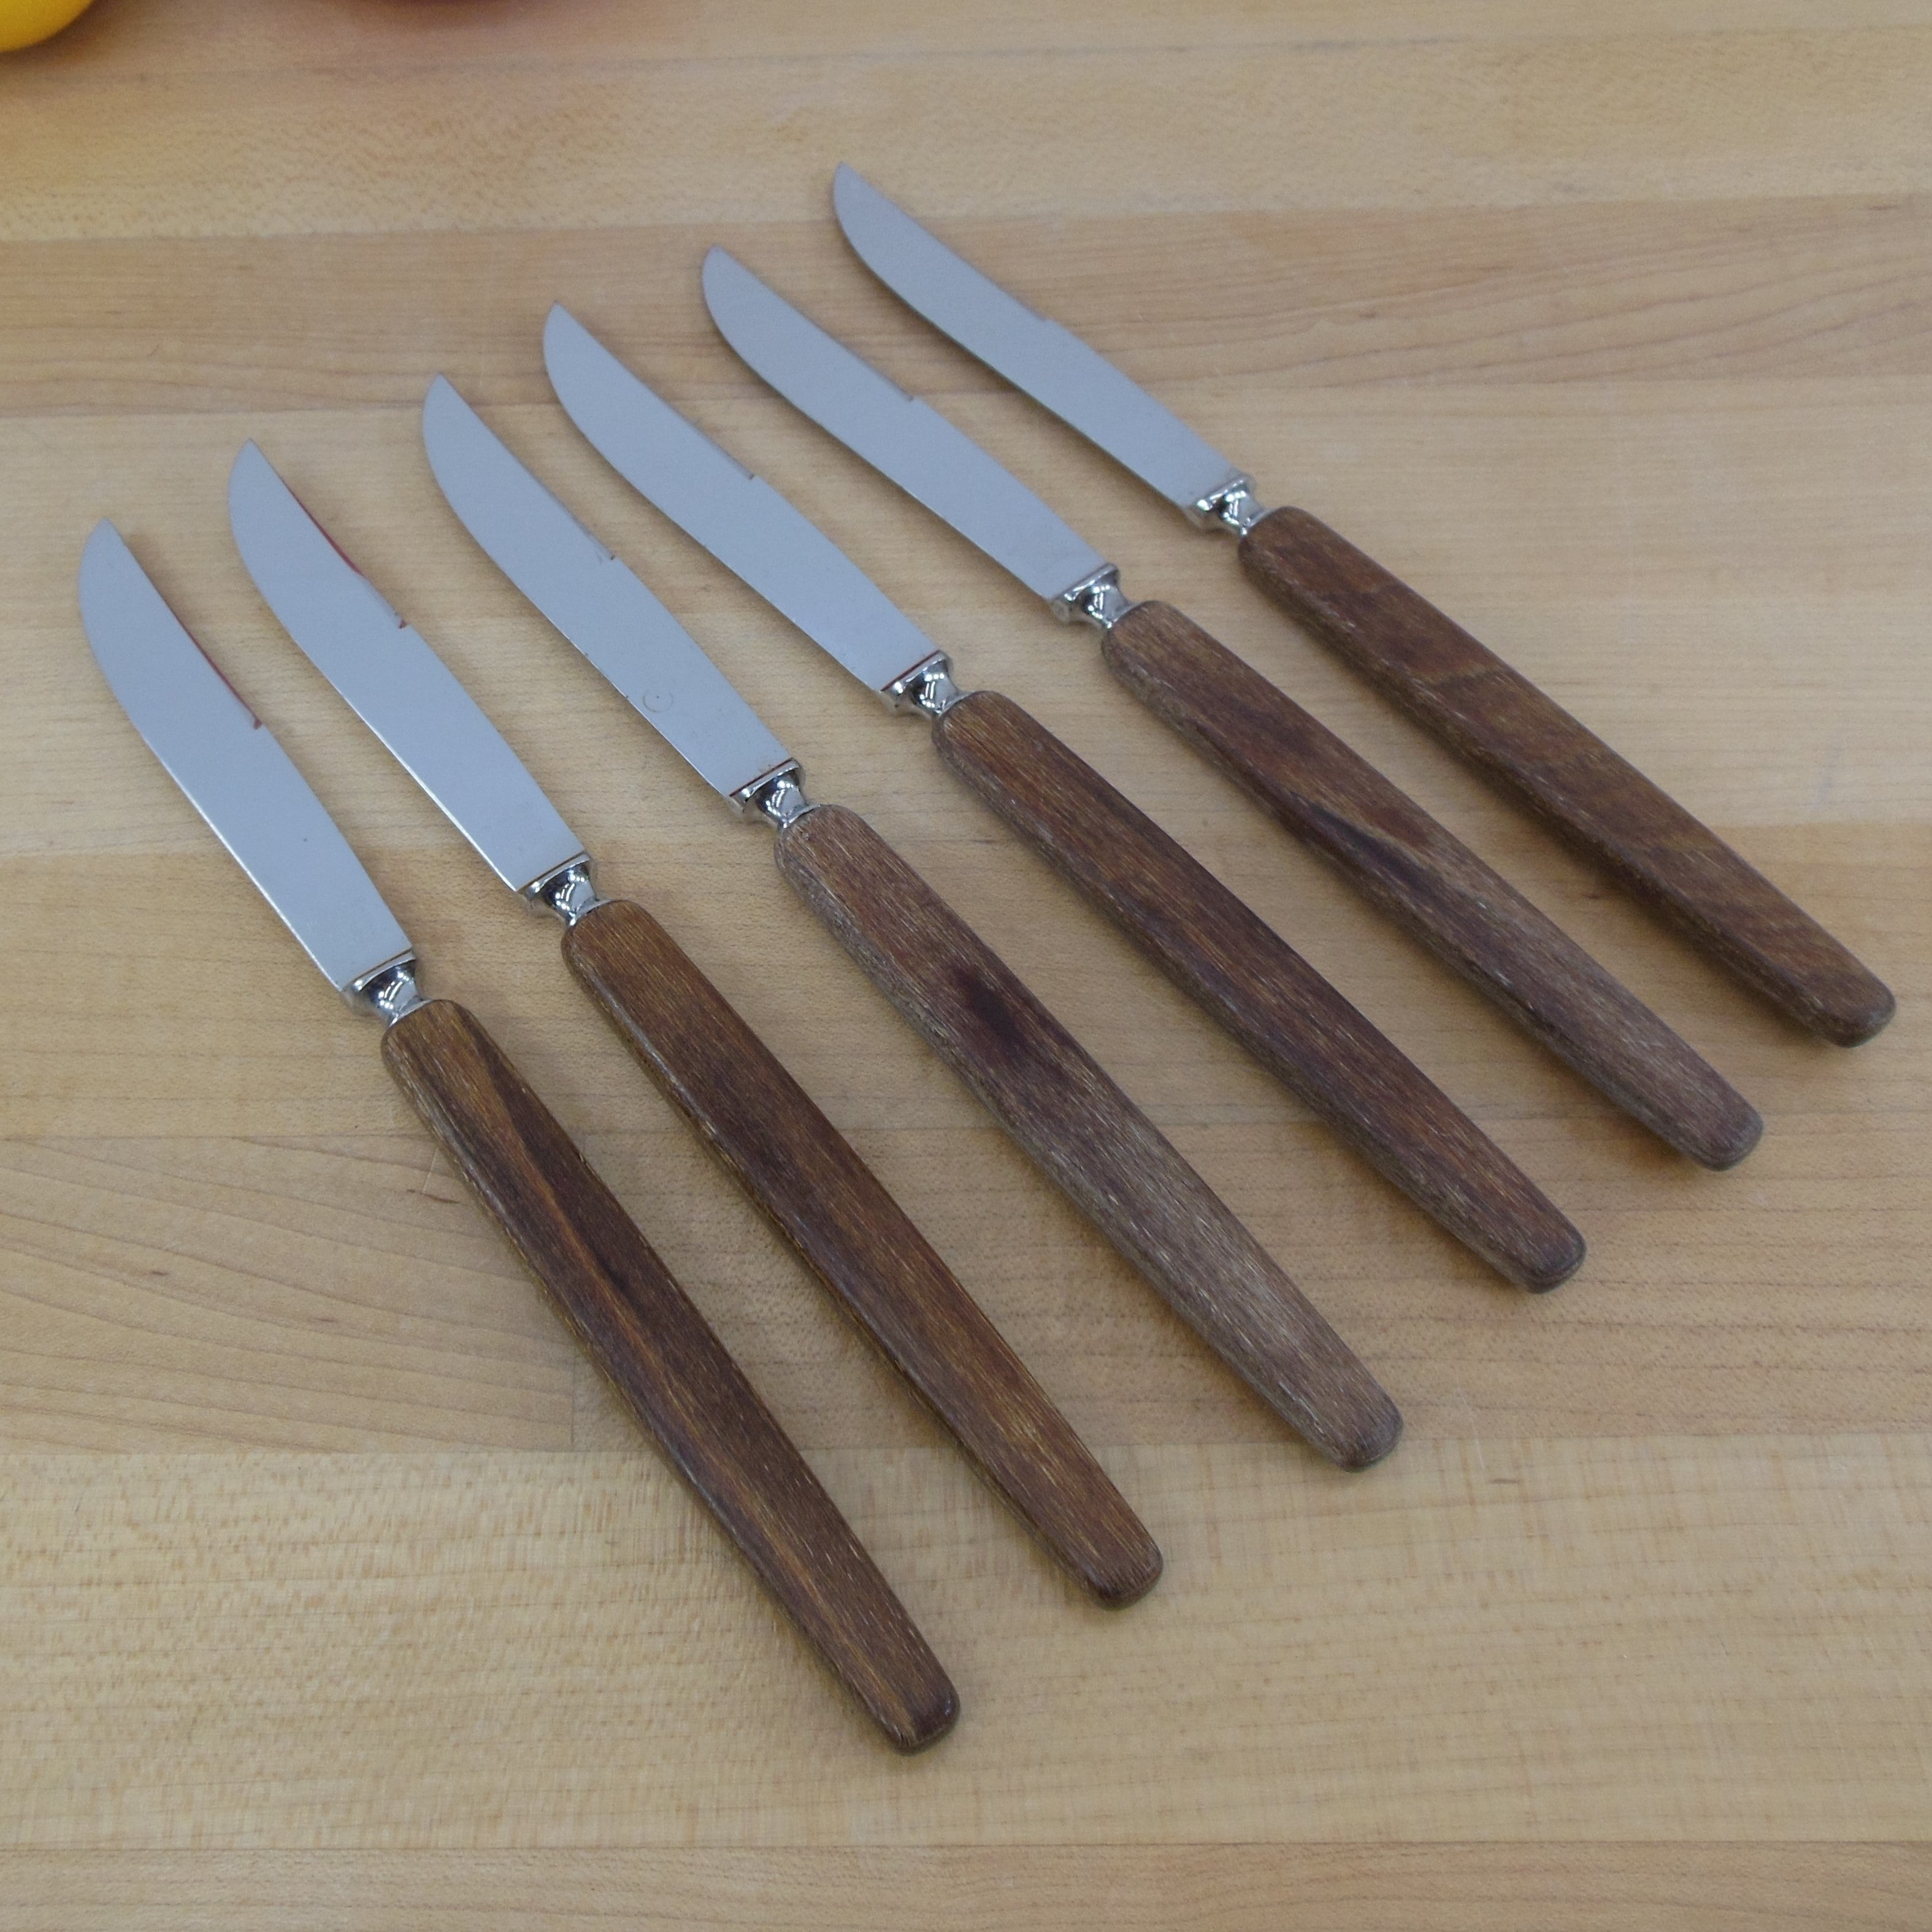 6-Piece Steak Knife Set — Messerstahl 2.0 – Knives that look sharp too.